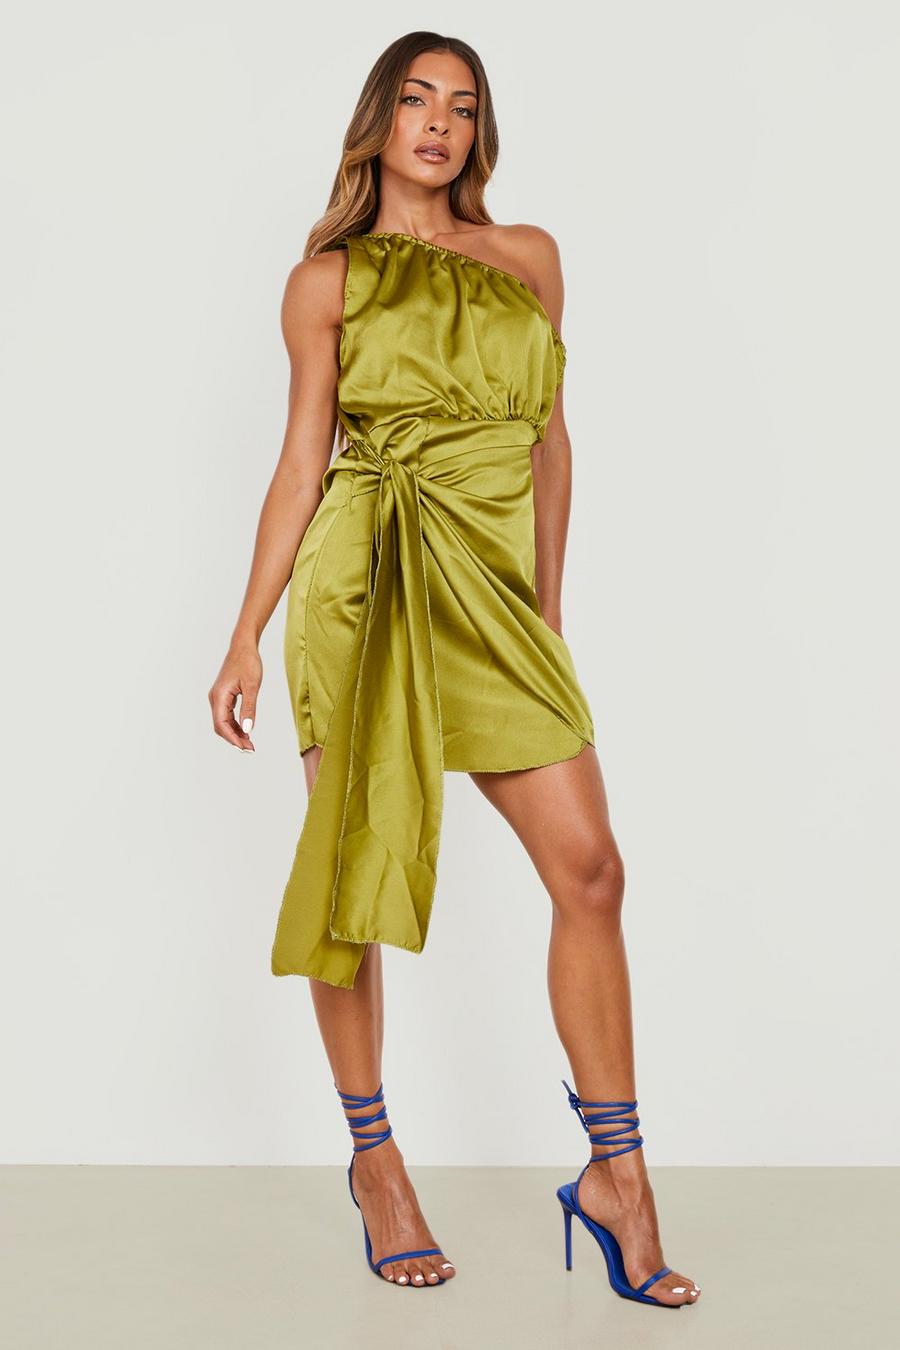 Chartreuse yellow Satin Asymmetric Tie Front Dress